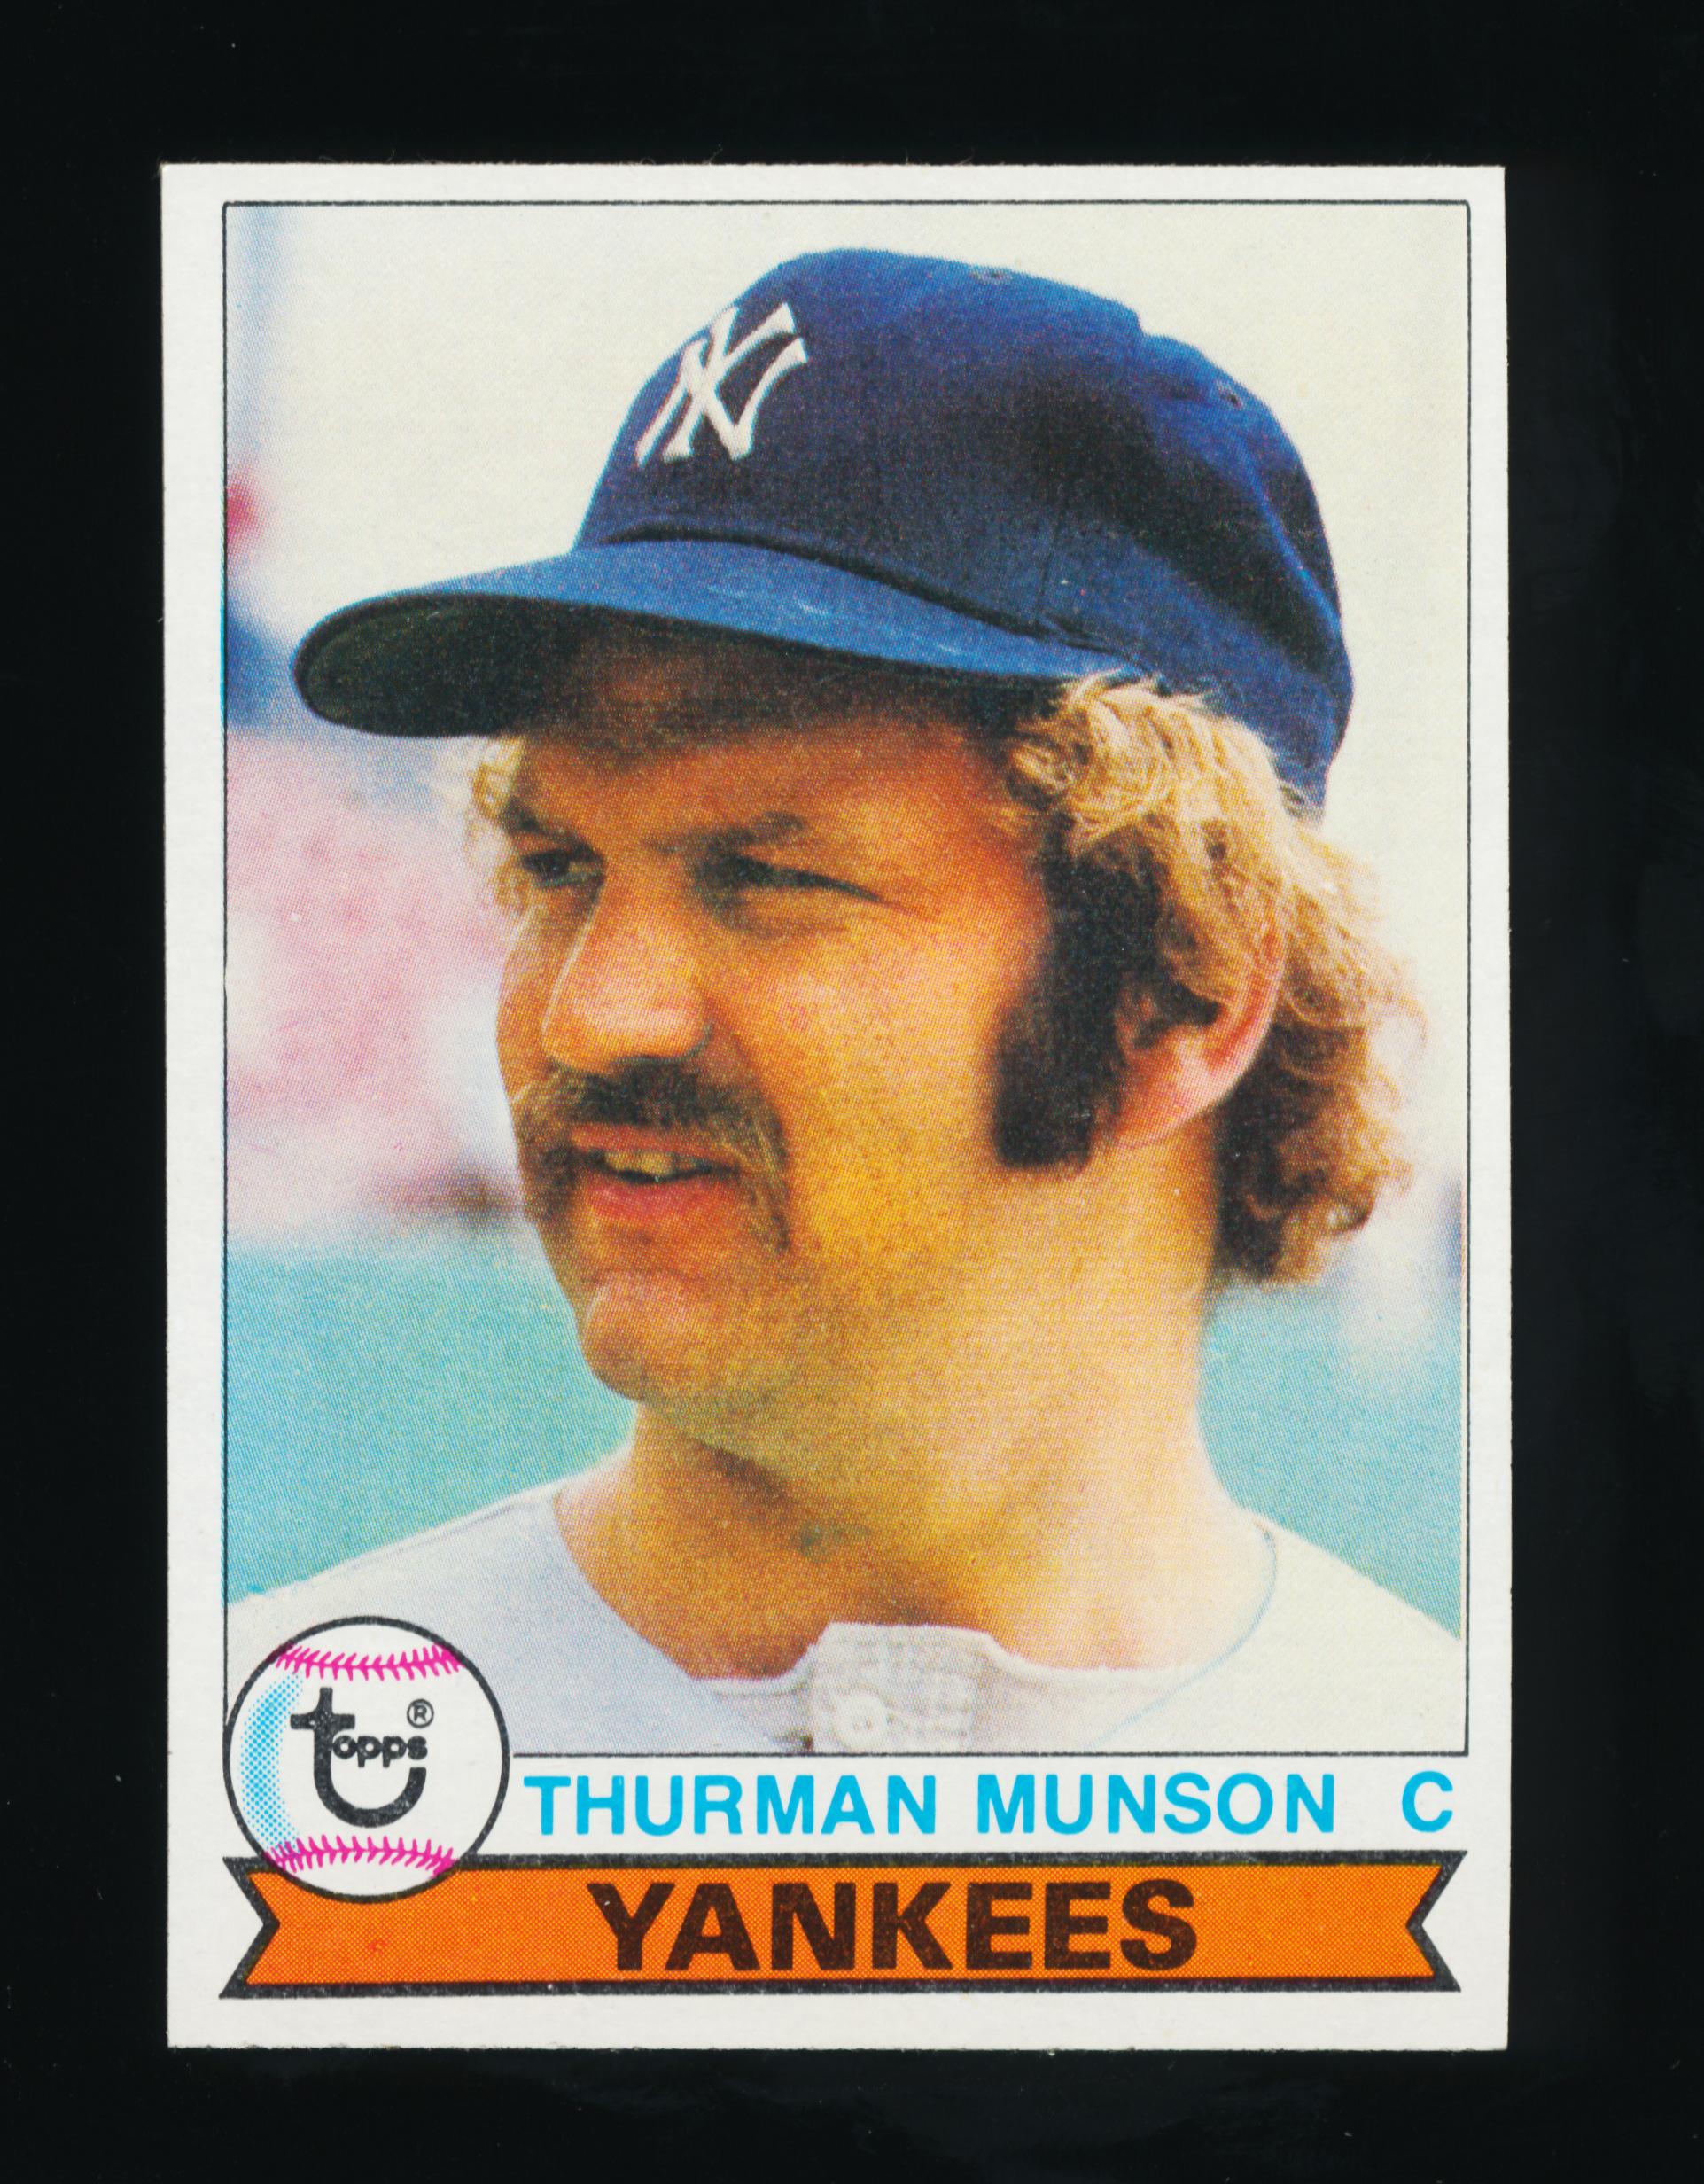 1979 Topps Baseball Card #310 Thurman Munson New York Yankees